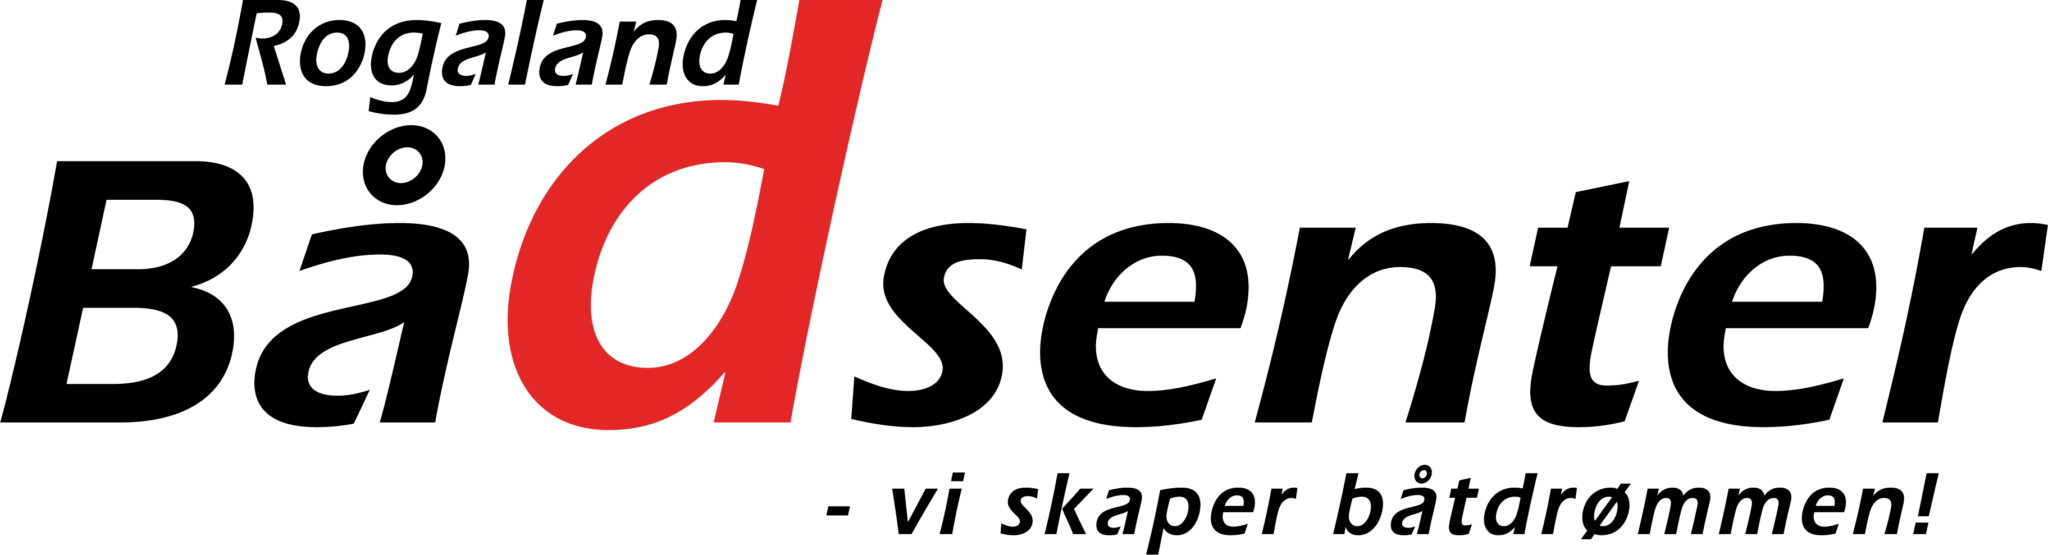 Rogaland logo